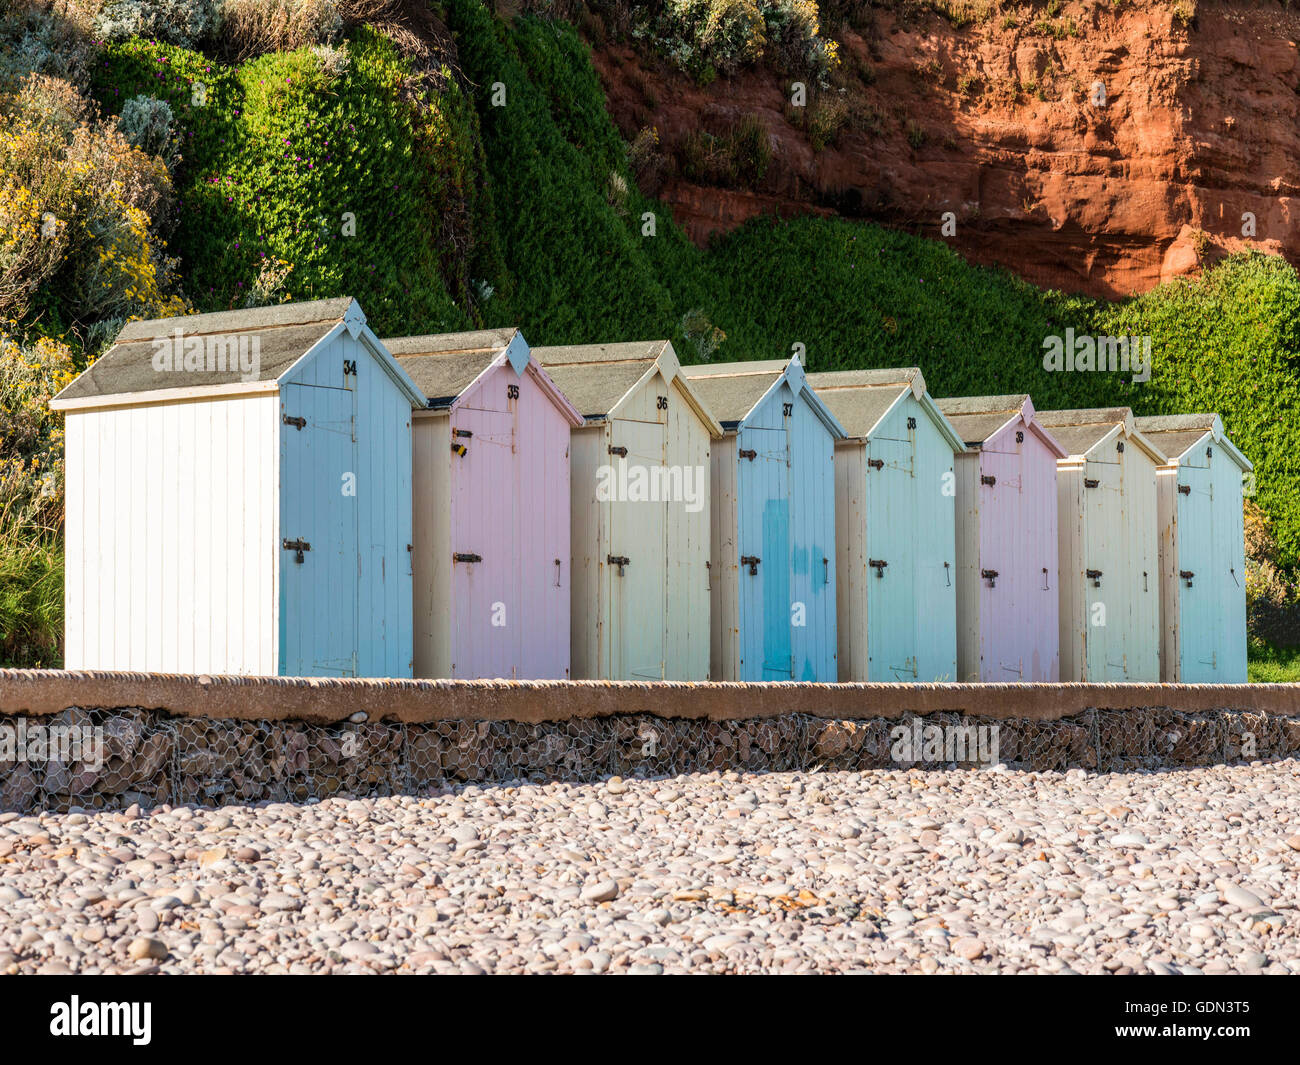 Seaside scene depicting a row of multicolored beach huts, asphalt pathway, pebbled beach and Jurassic coast. Stock Photo